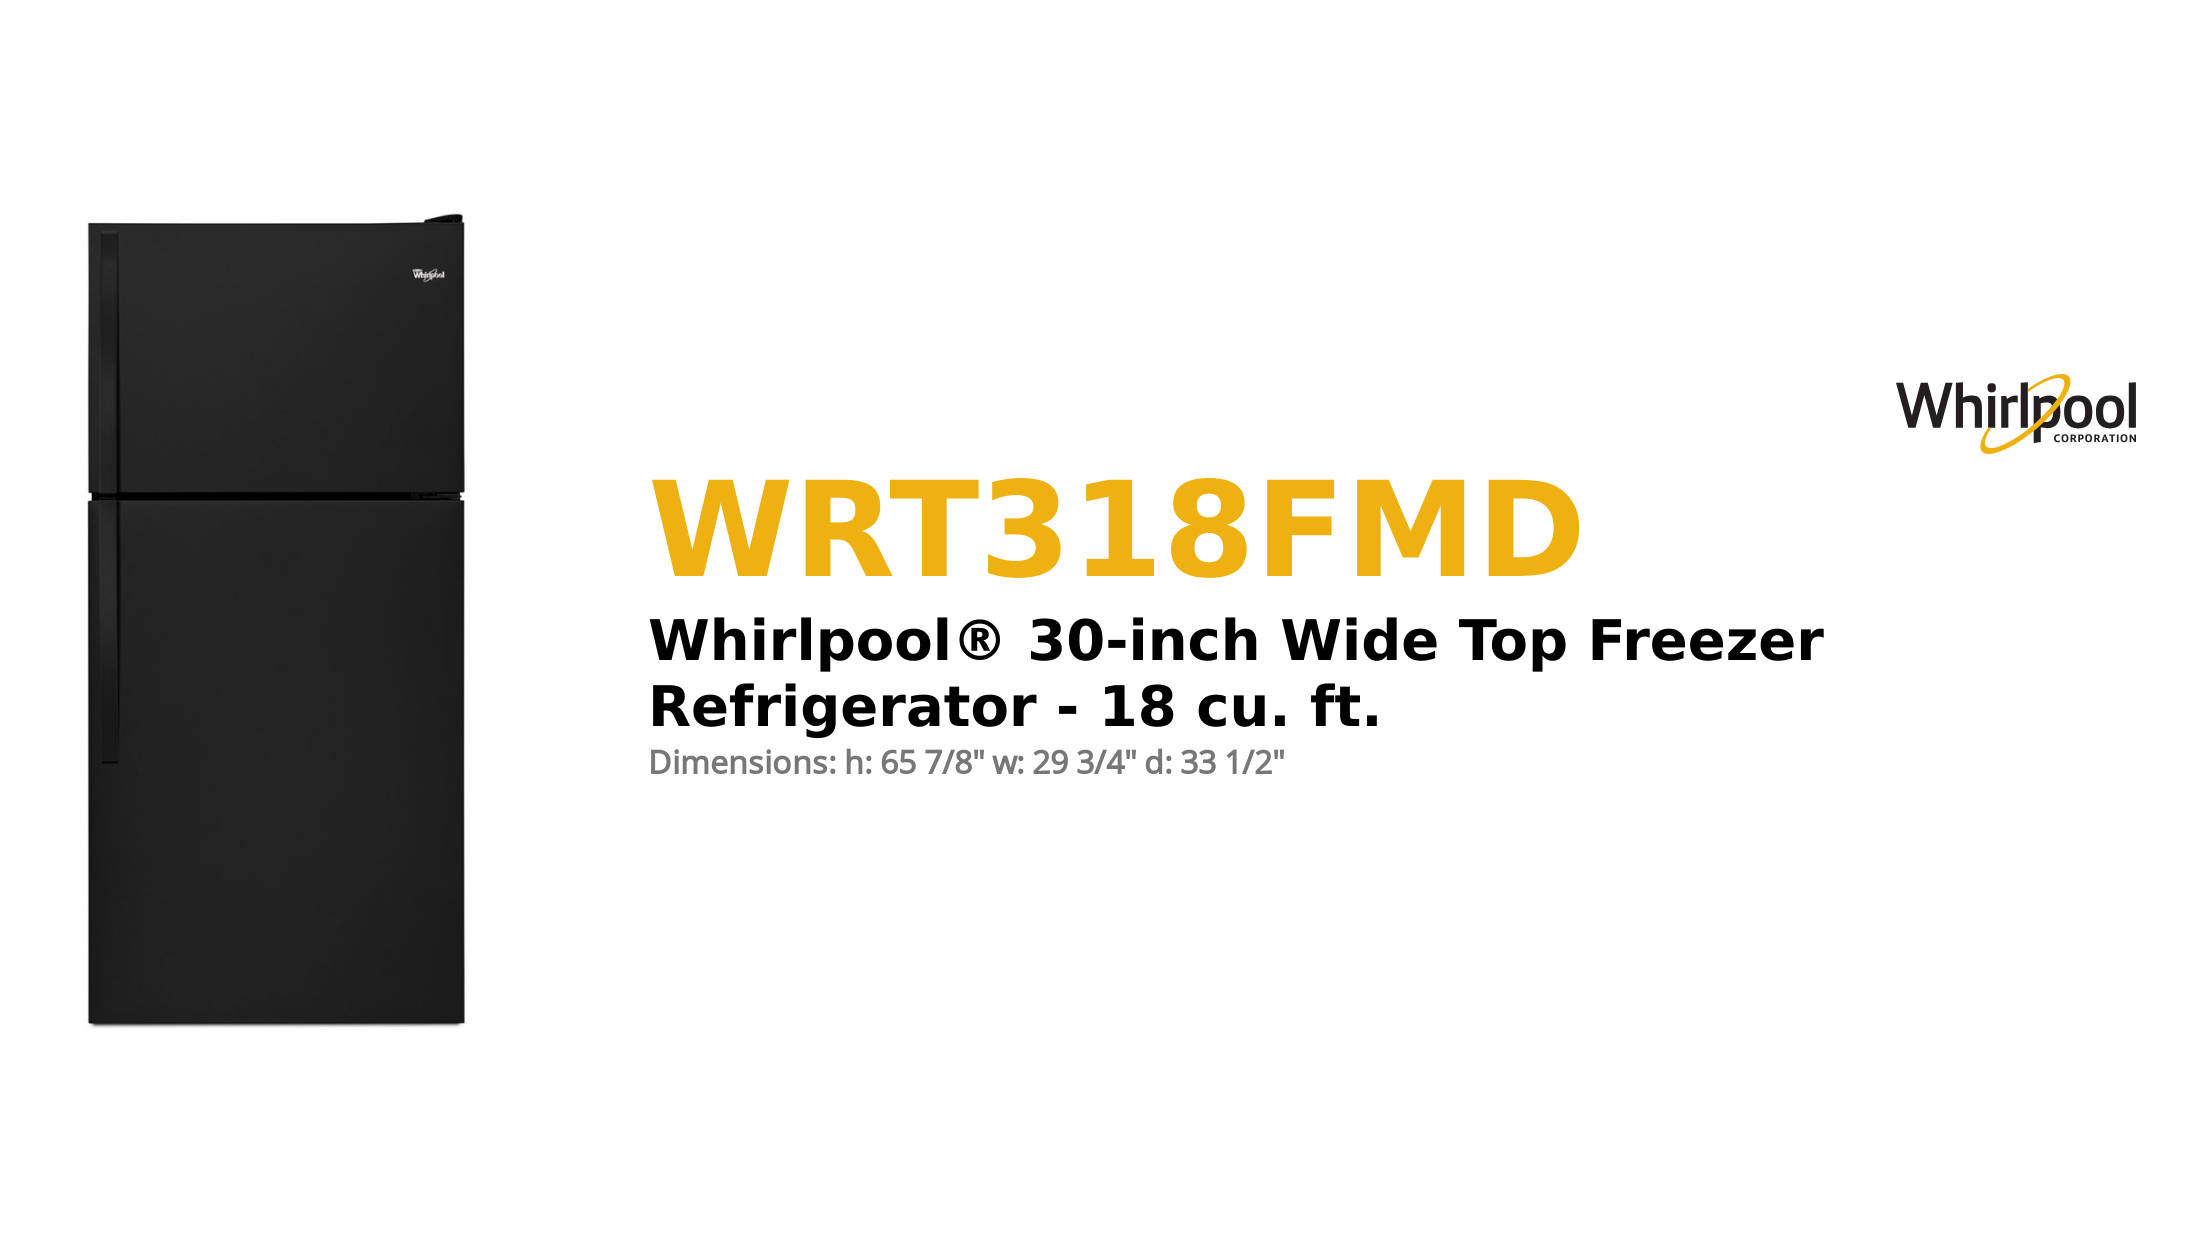 Whirlpool® 30-inch Wide Top Freezer Refrigerator - 18 cu. ft.